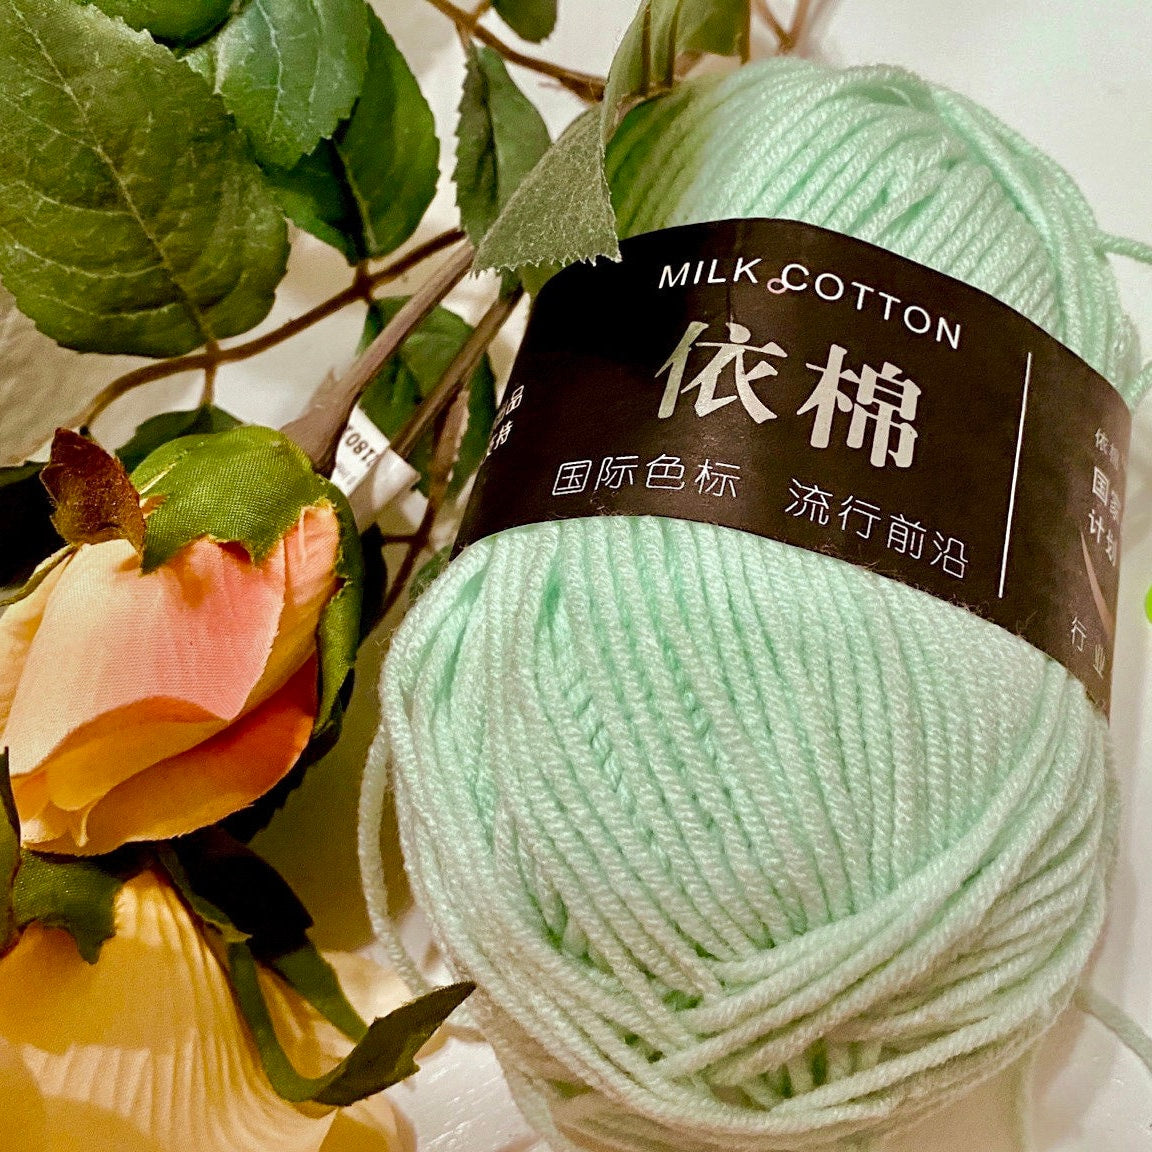  Yarn for Crocheting - Cotton Yarn for Crocheting